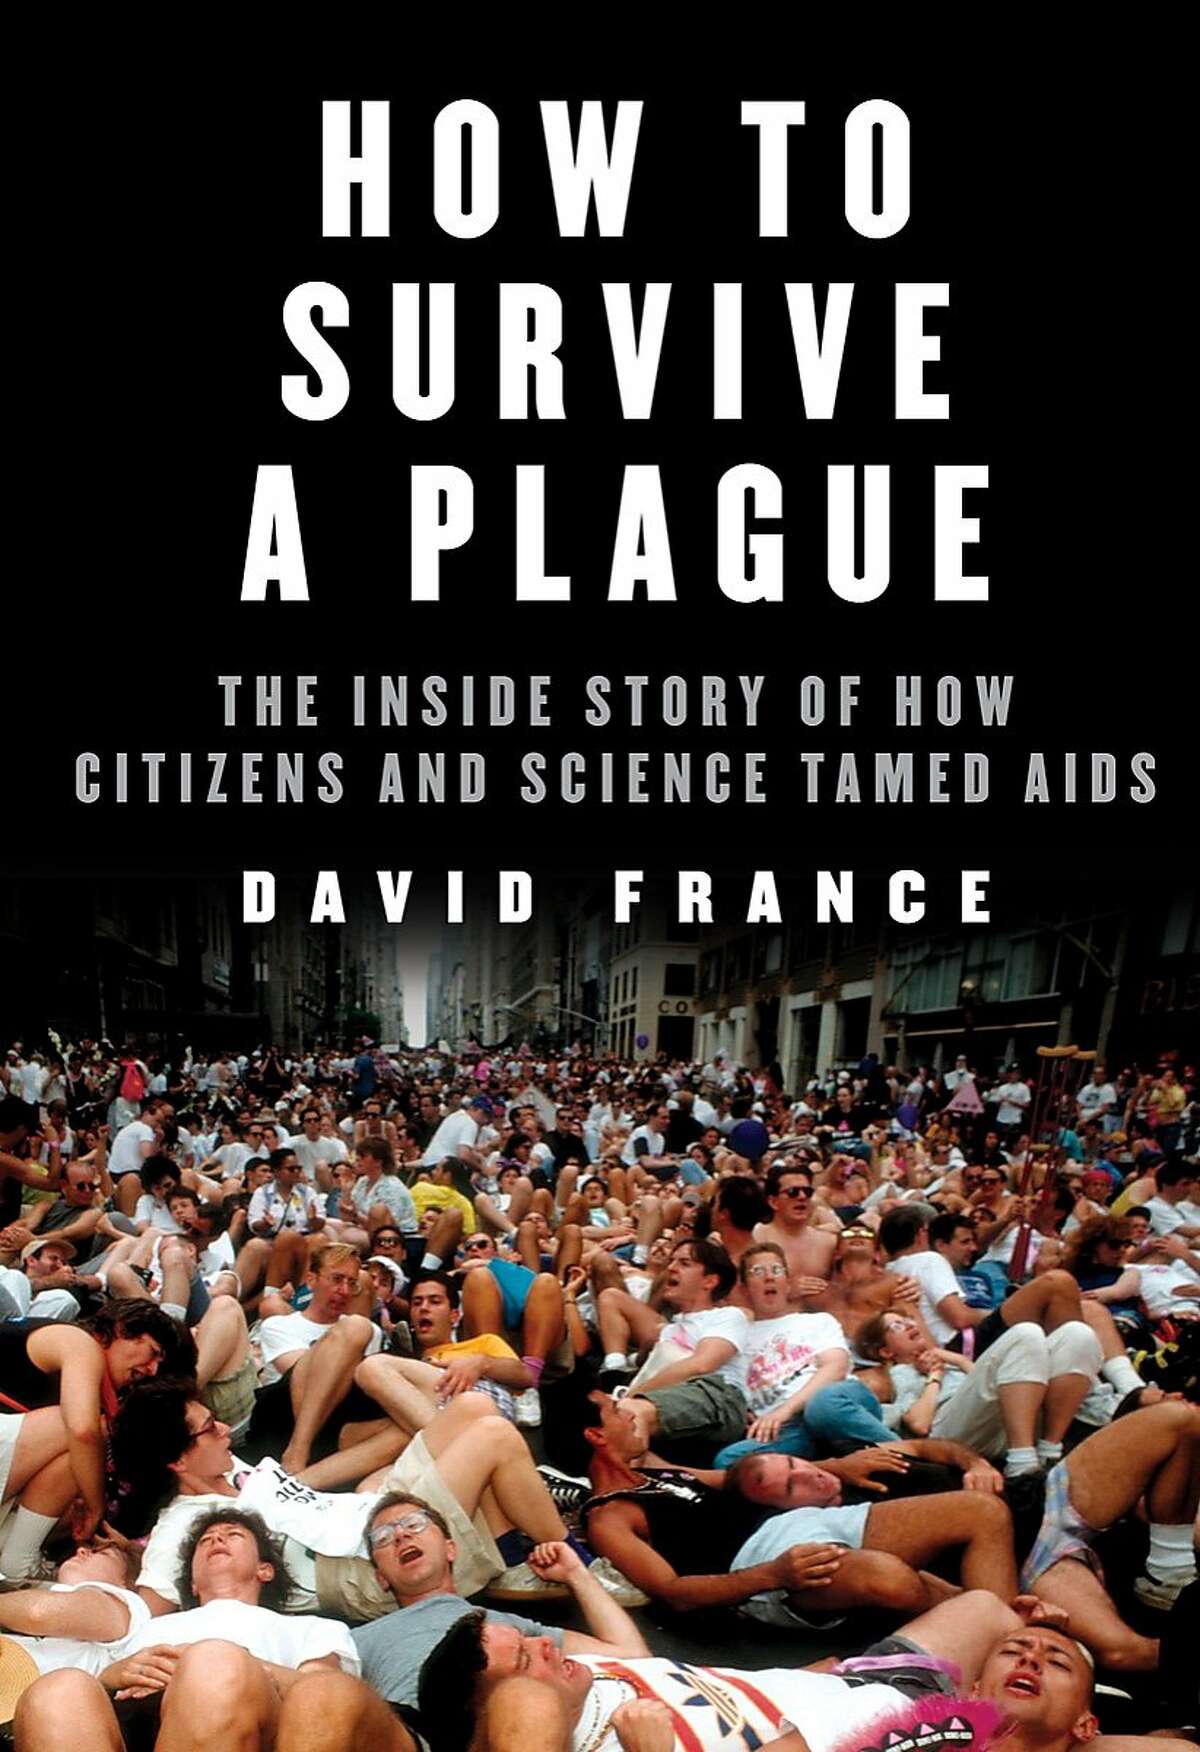 "How to Survive a Plague"